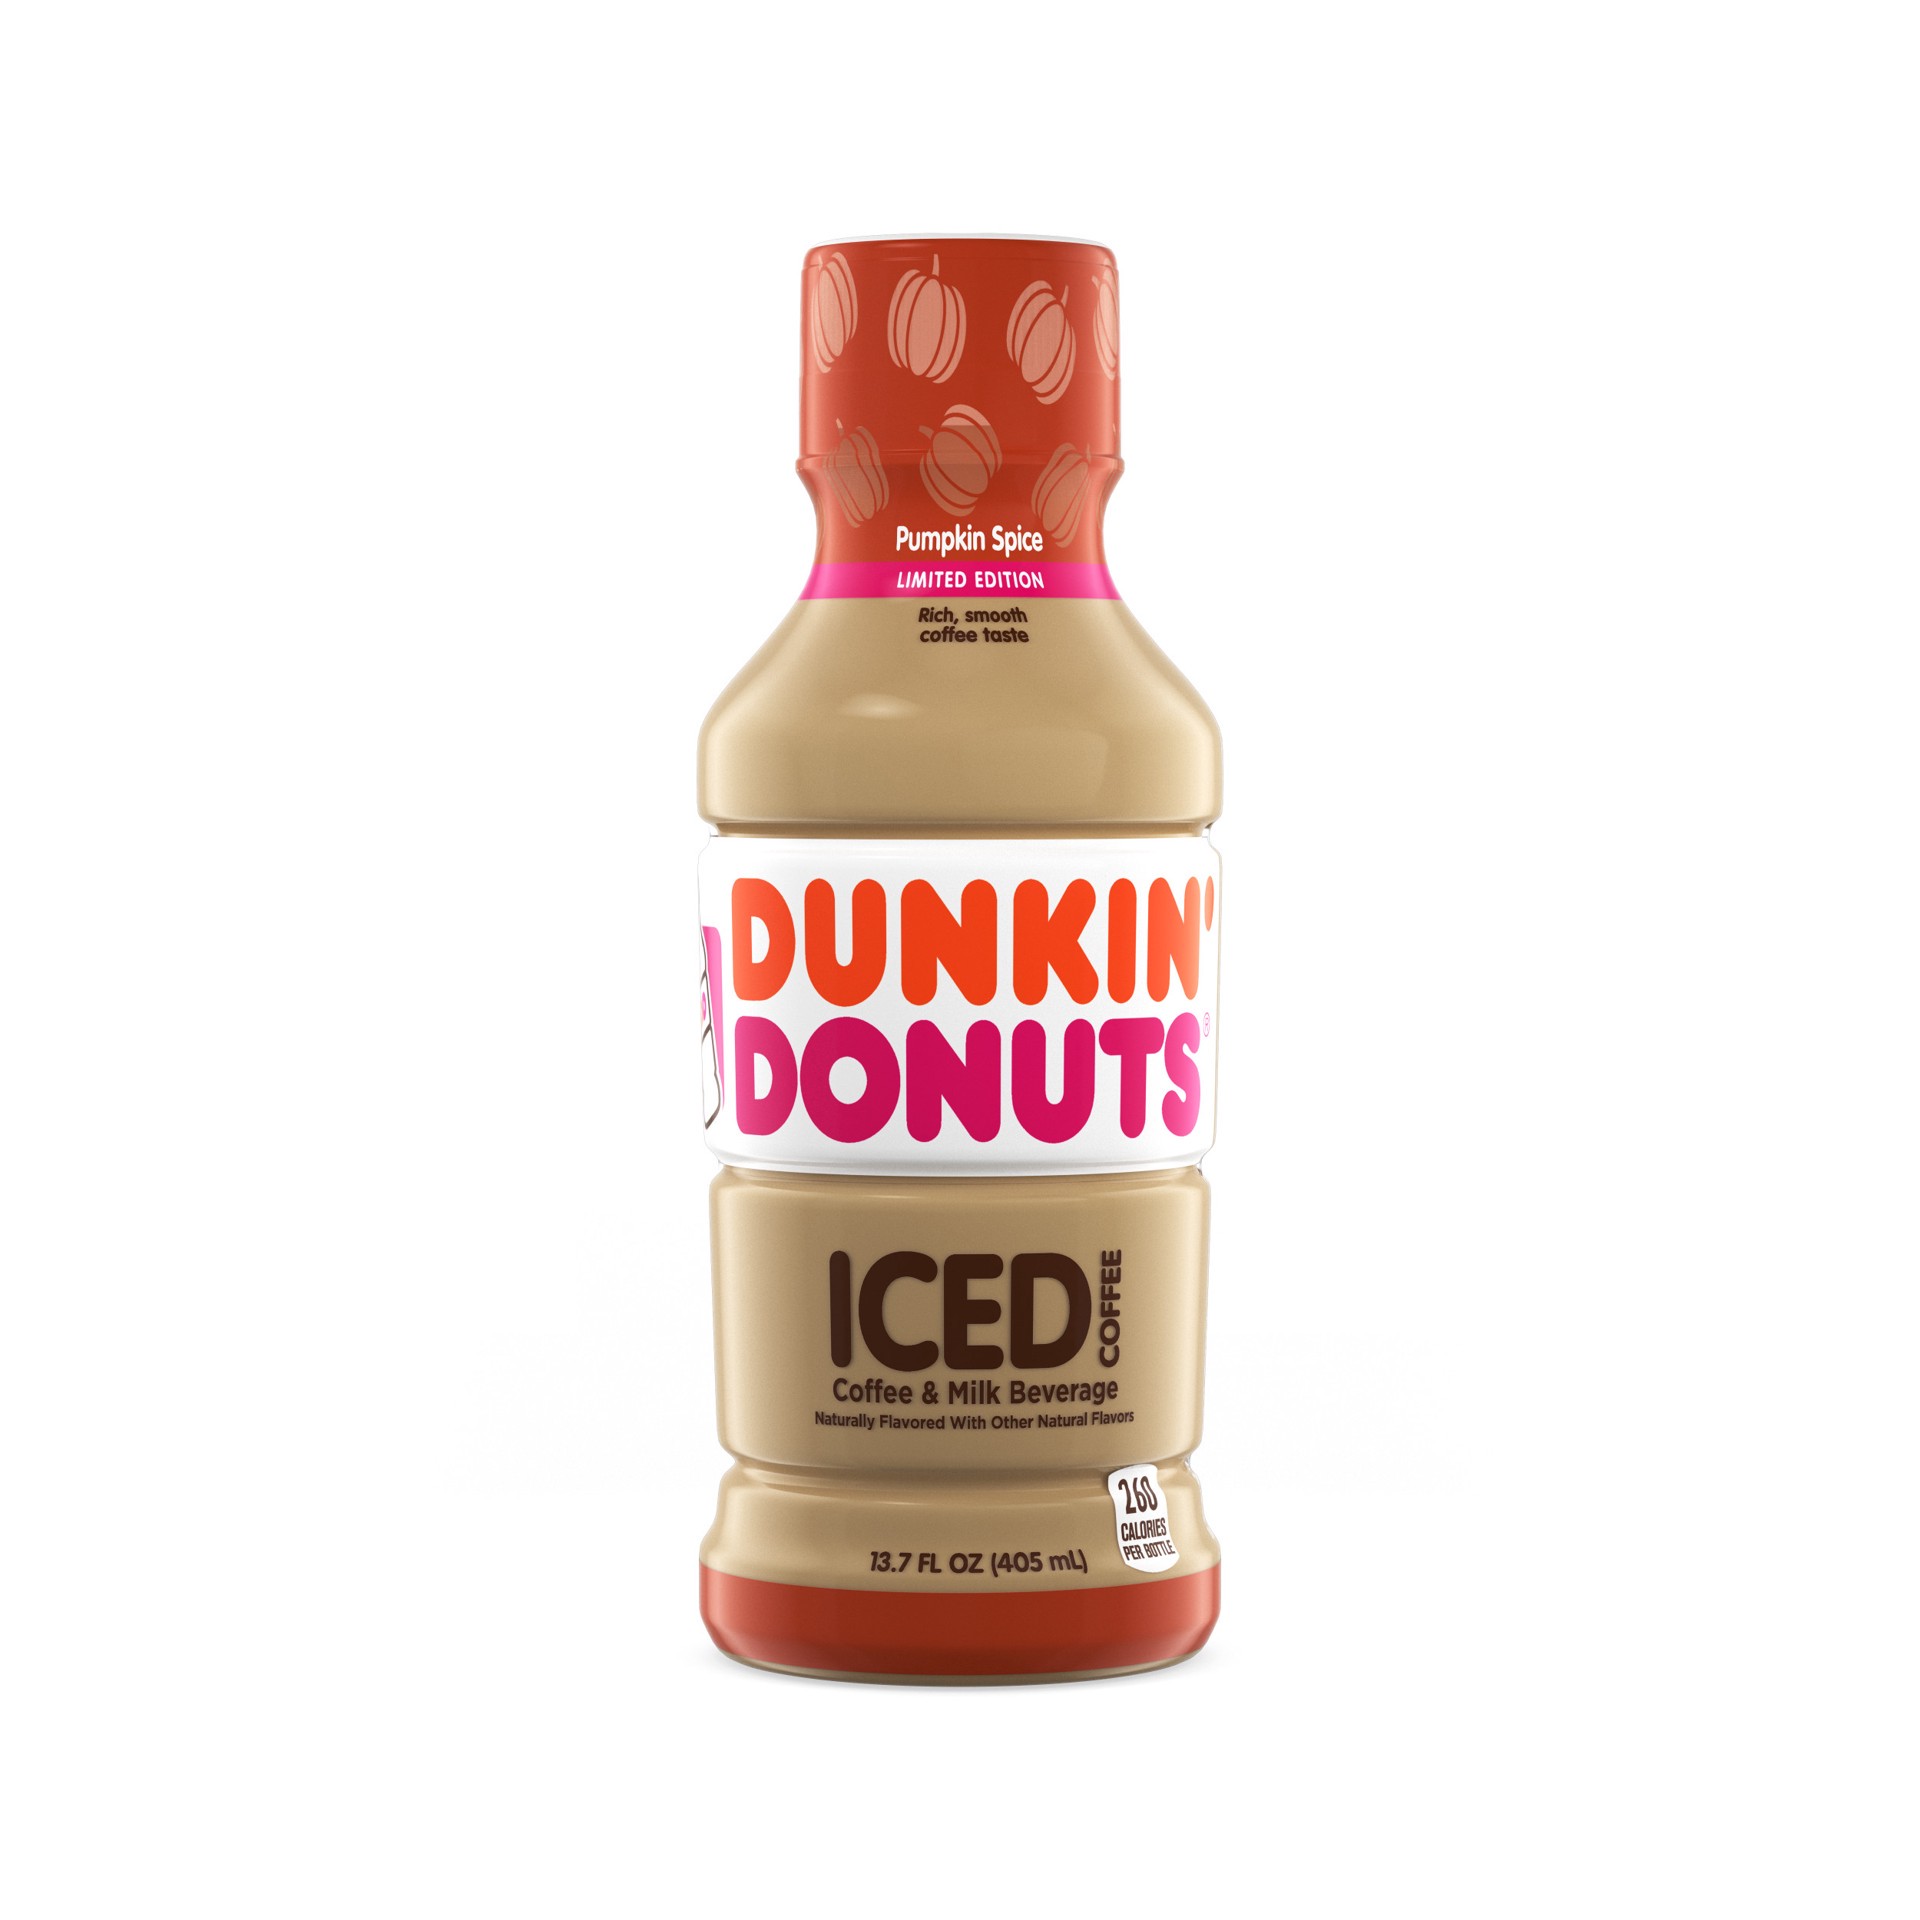 Dunkin' Dunkin Donuts Limited Edition Pumpkin Spice Iced Coffee 13.7 fl